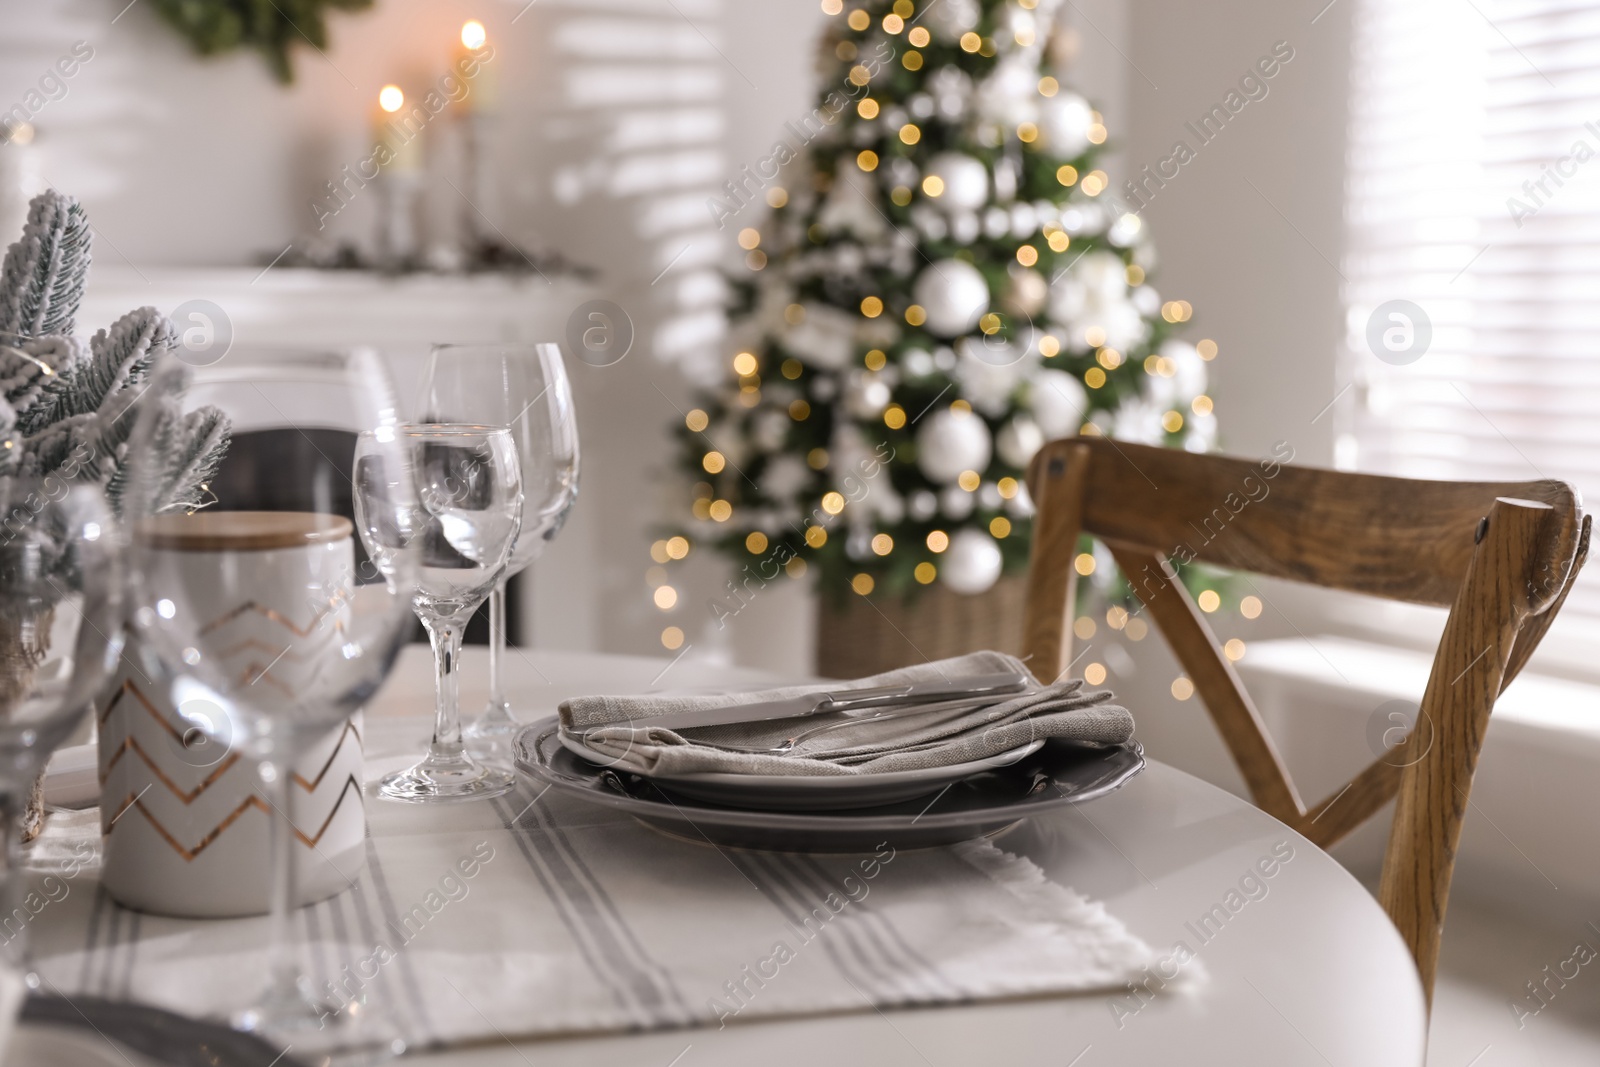 Photo of Festive table setting and beautiful Christmas decor indoors. Interior design